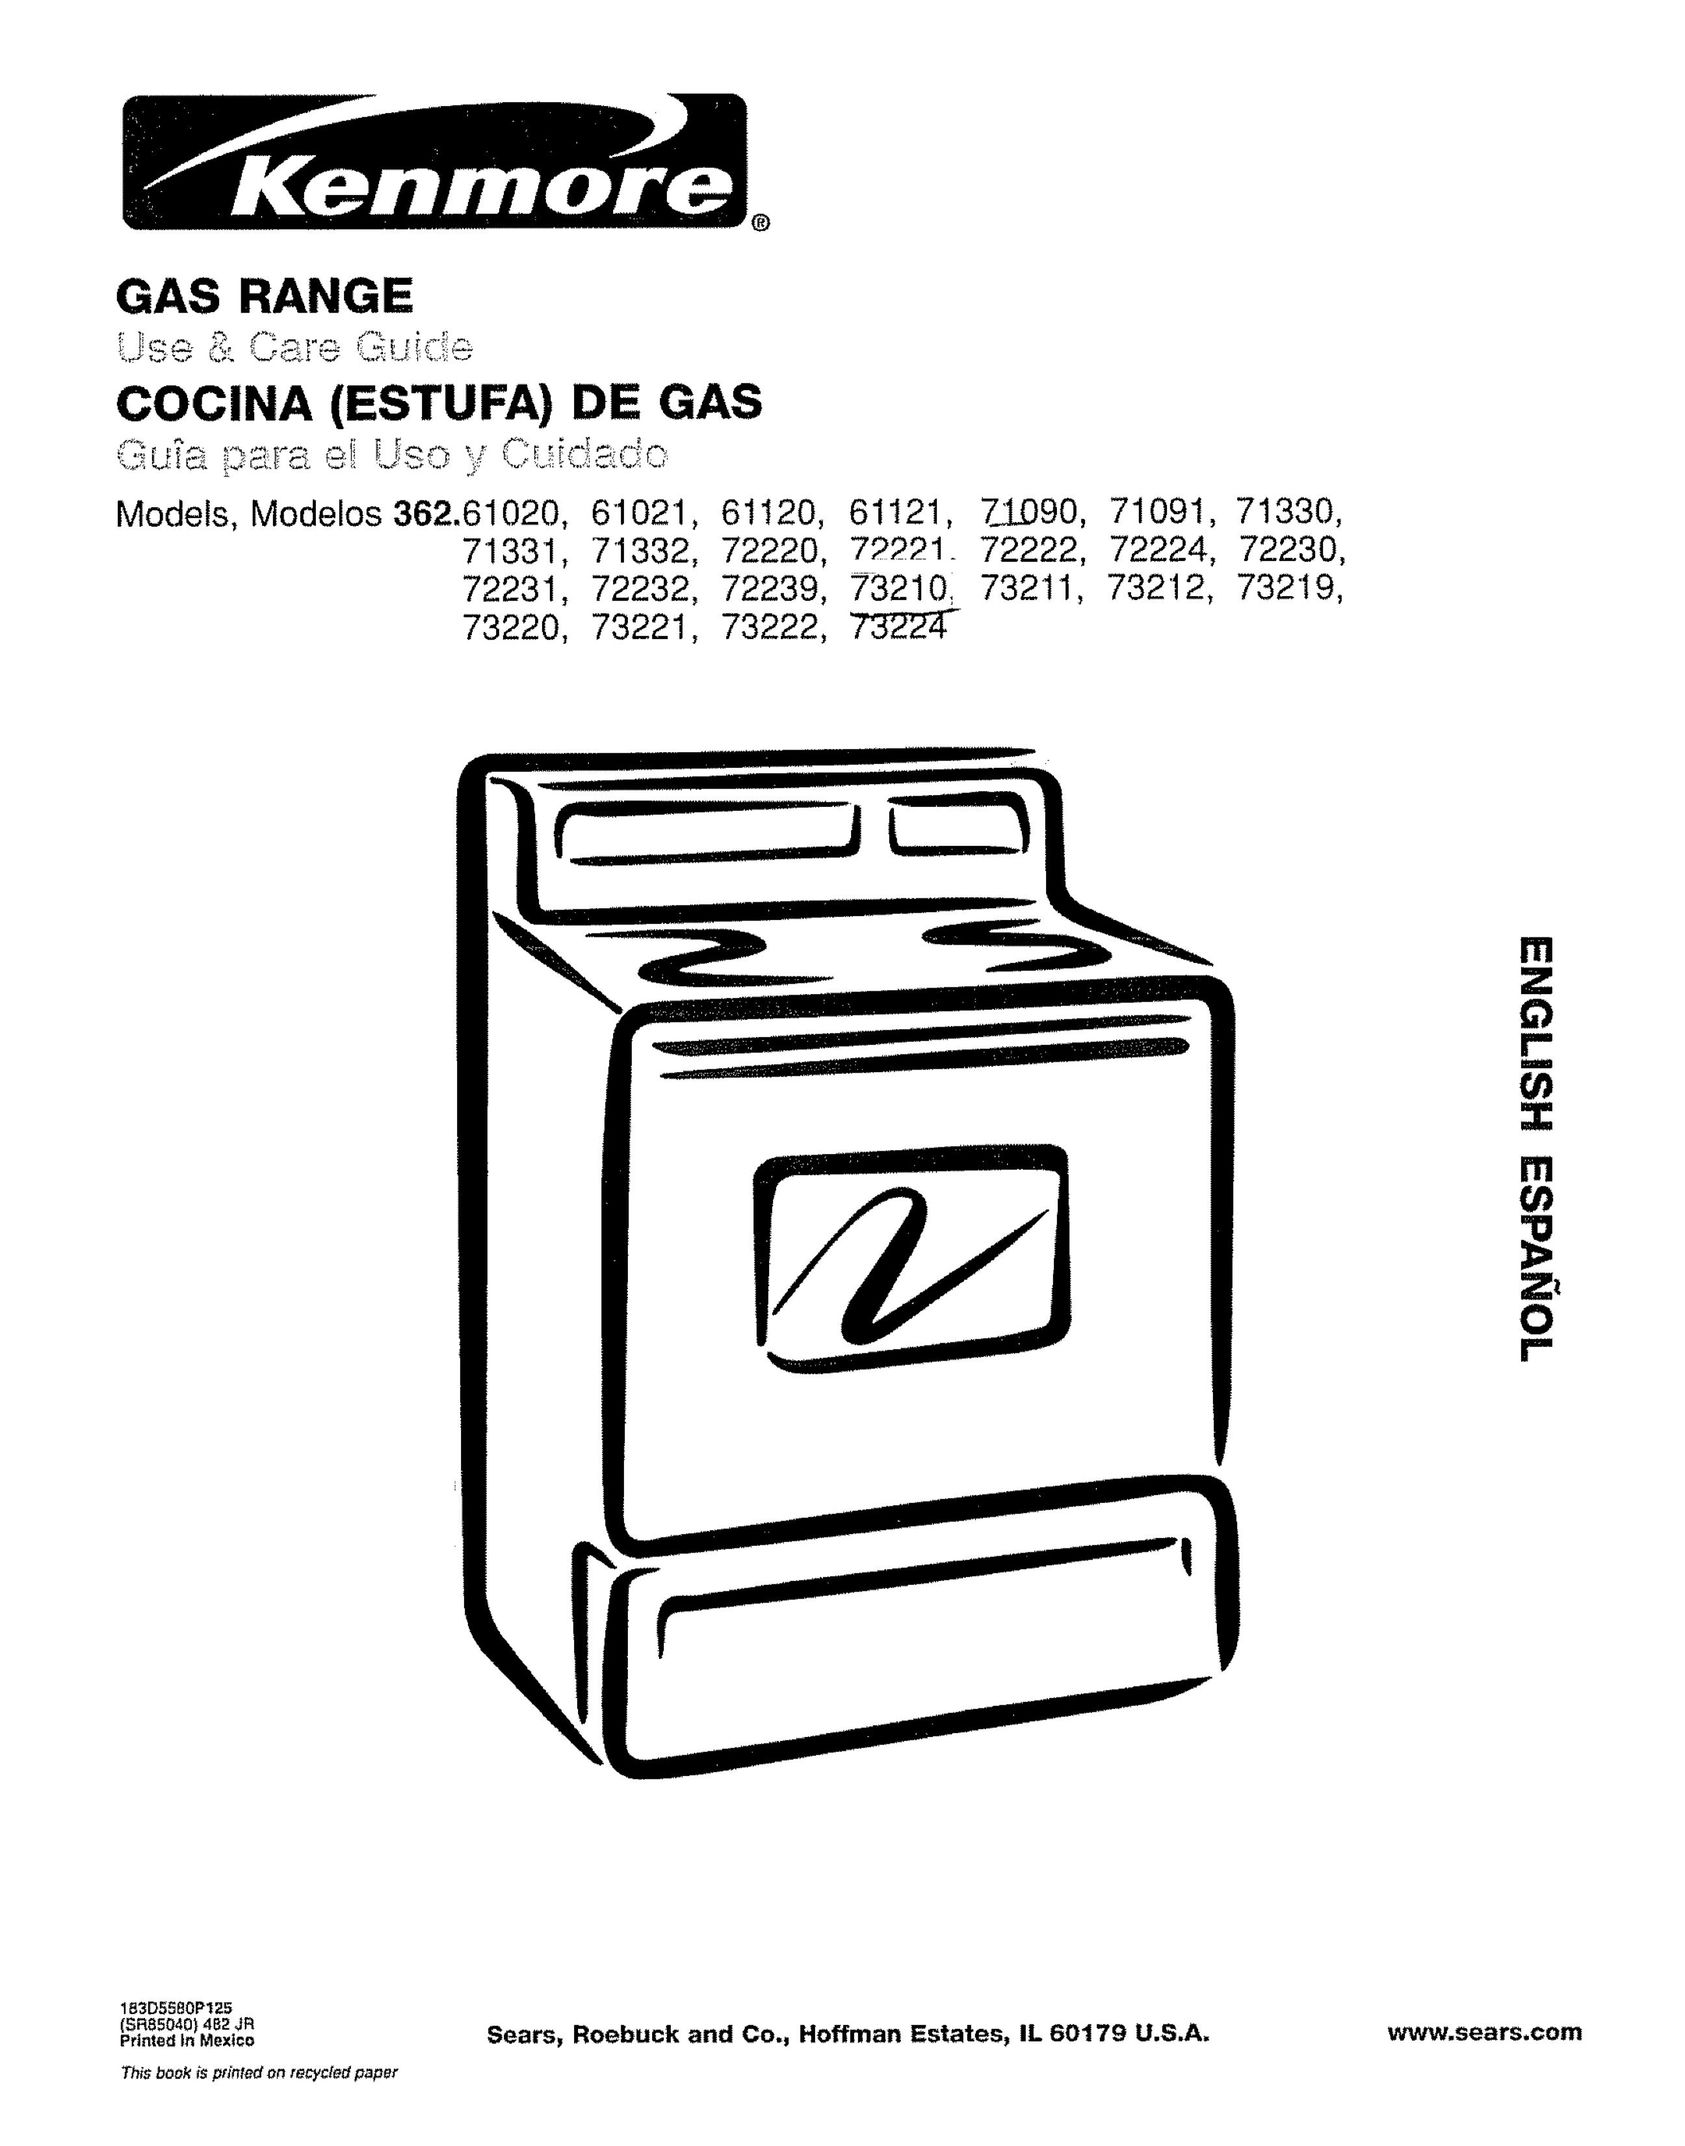 Kenmore 362.71331 Range User Manual